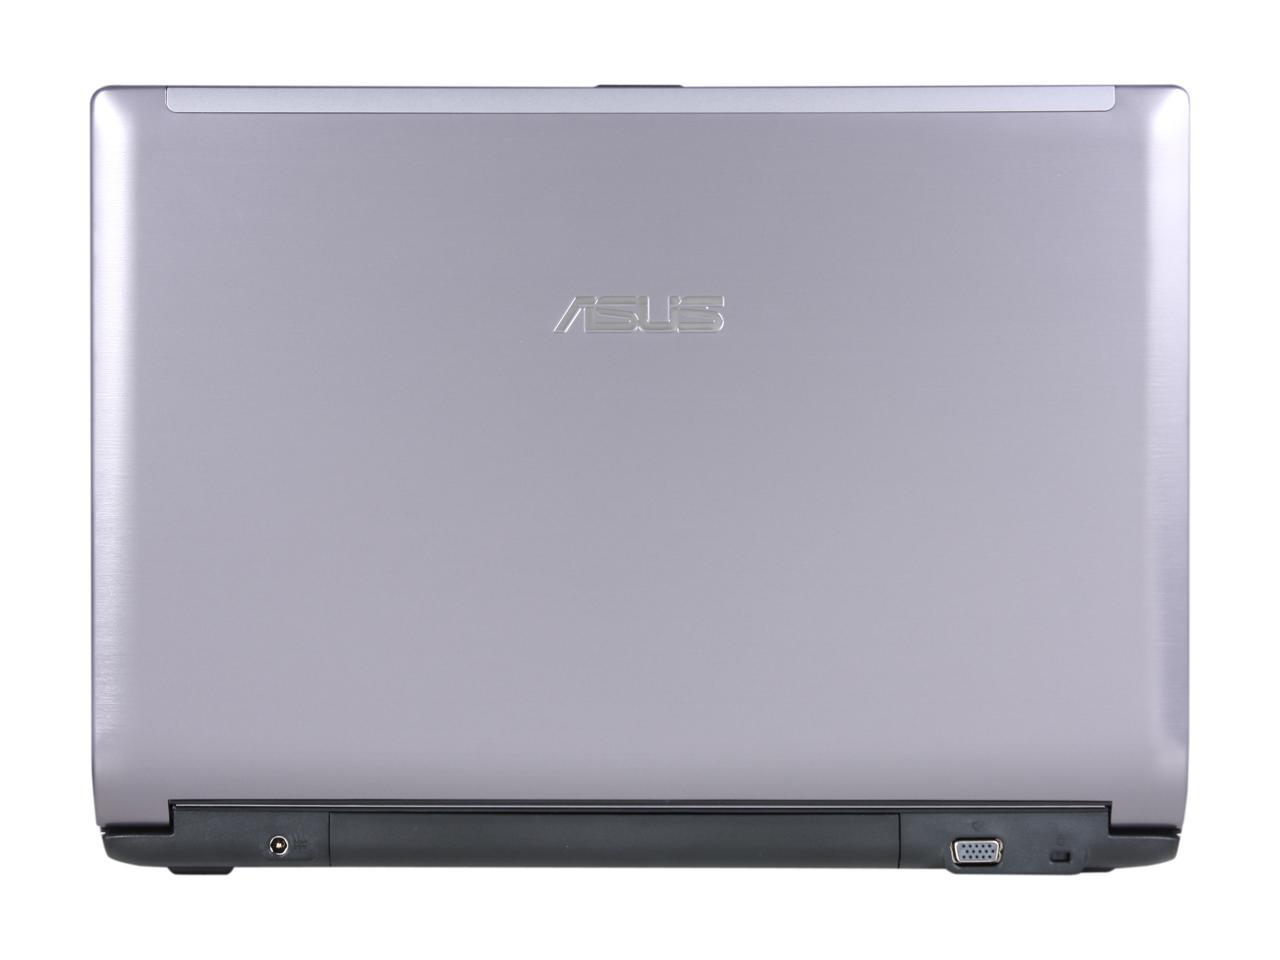 ASUS Laptop N53SV-DH72 Intel Core i7 2nd Gen 2670QM (2.20 GHz) 6 GB